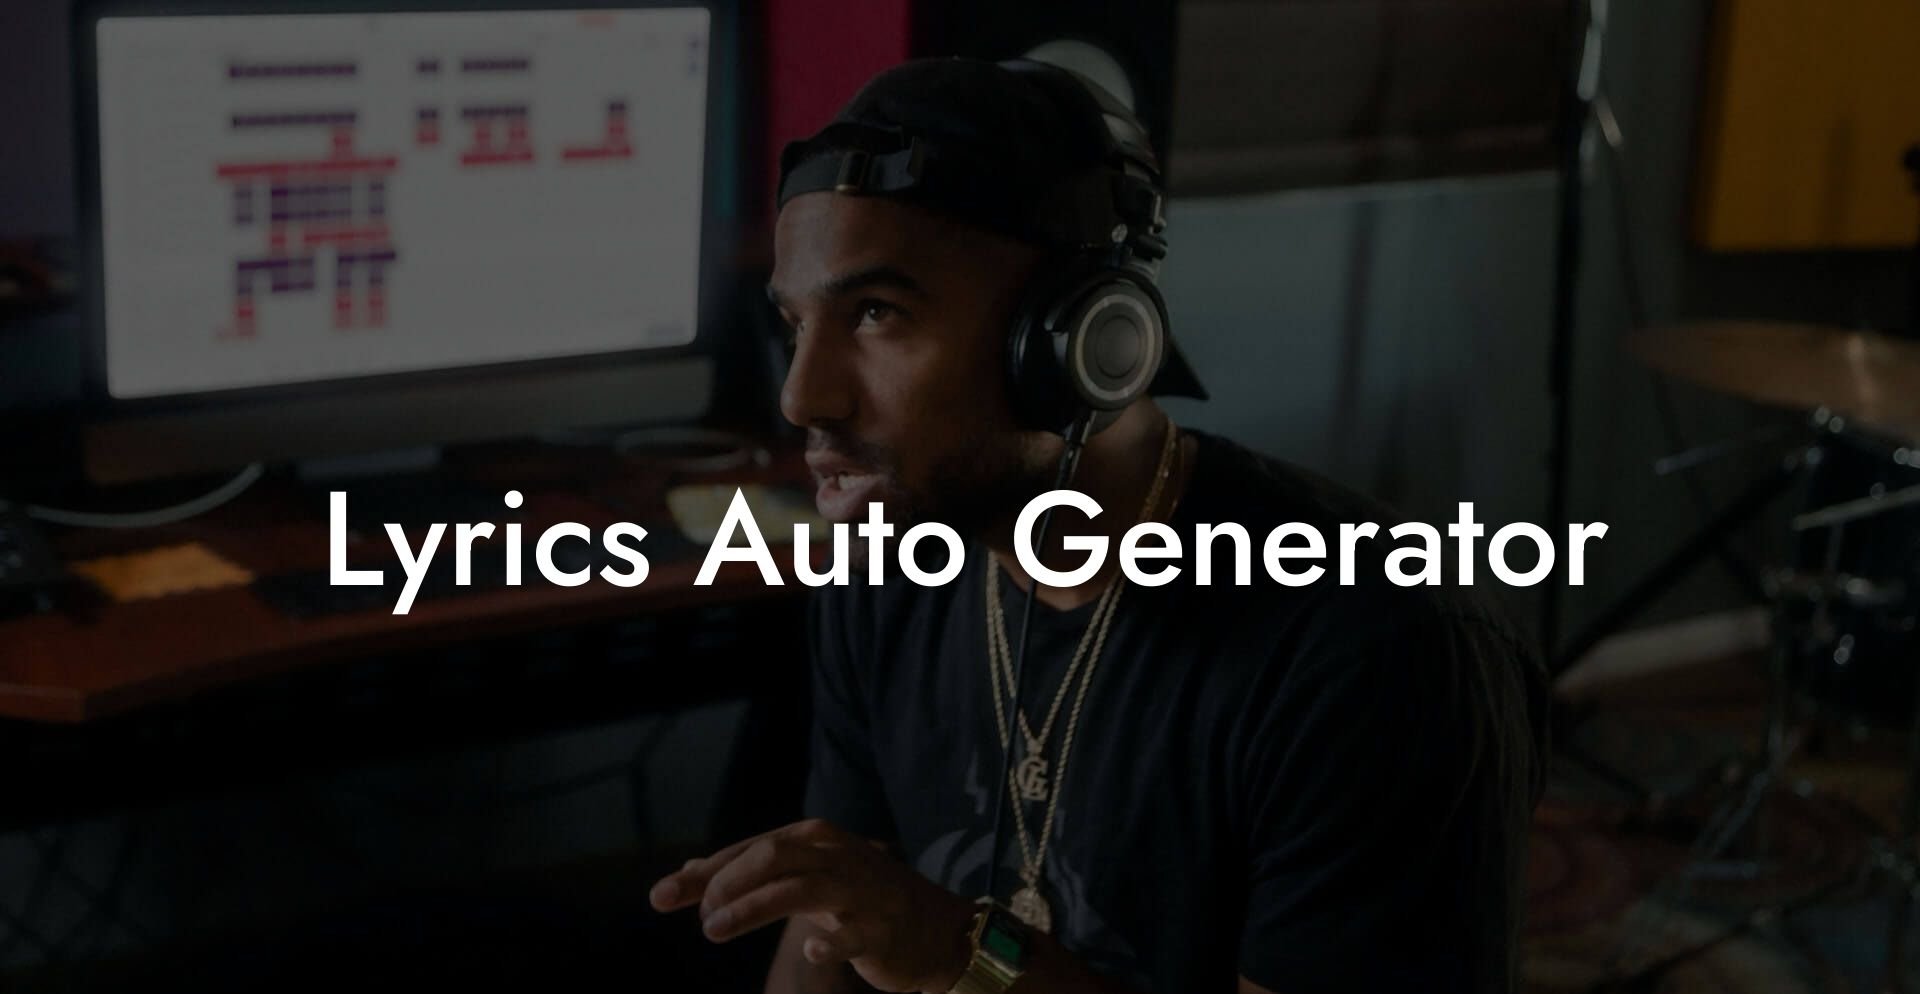 lyrics auto generator lyric assistant